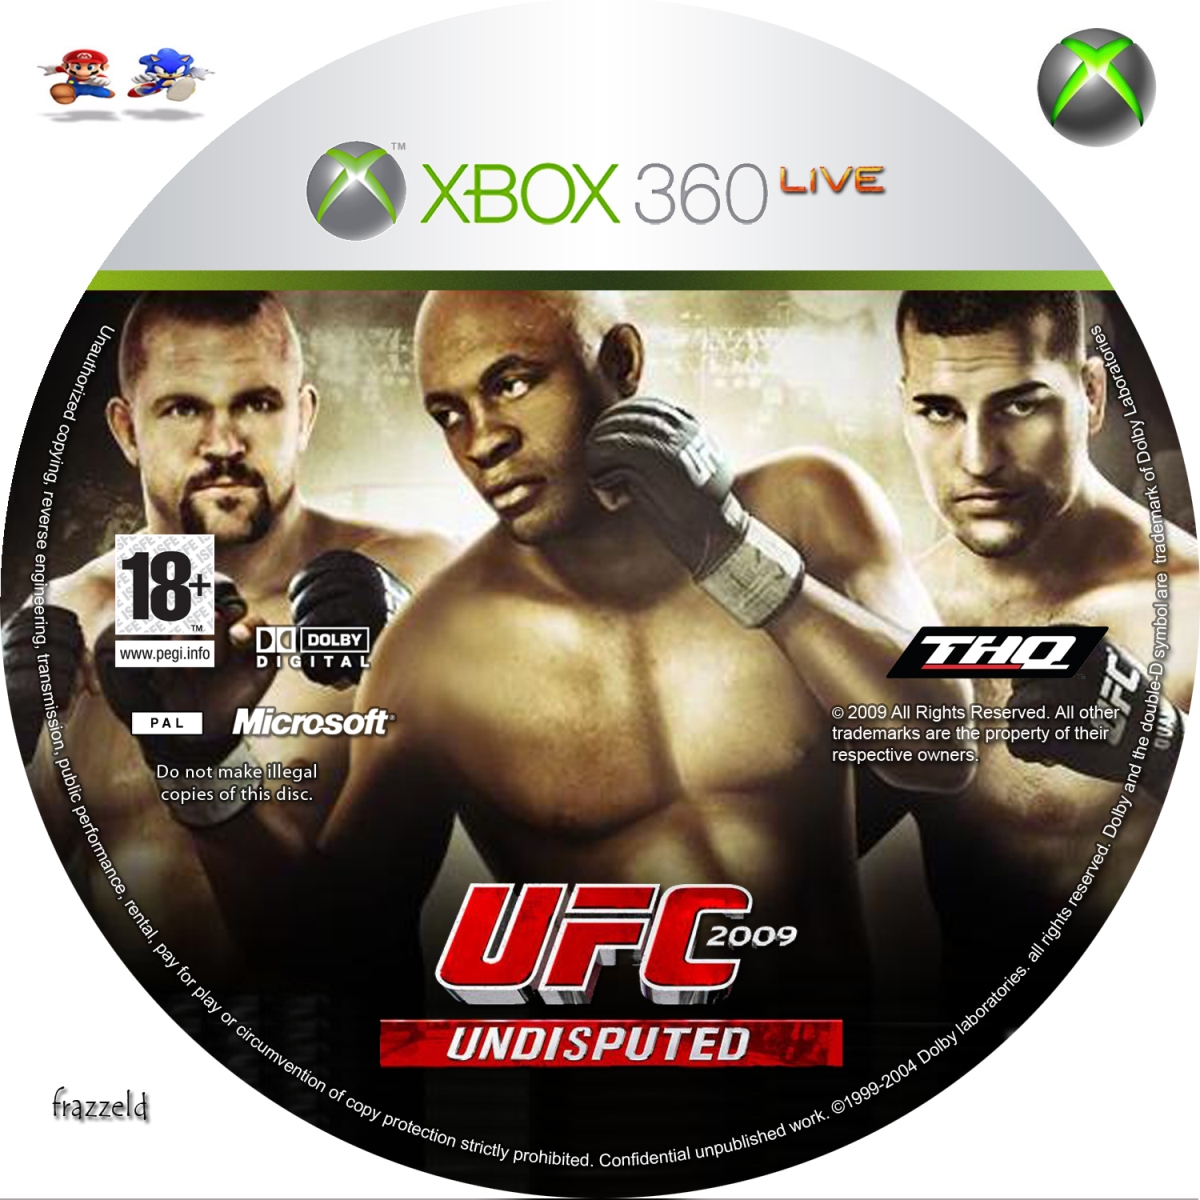 X xbox 360 игры. UFC 2009 Undisputed Xbox 360. UFC 3 Undisputed Xbox 360 диск. Обложка УФС 3 Xbox 360. Диск для Xbox 360 UFC 2.